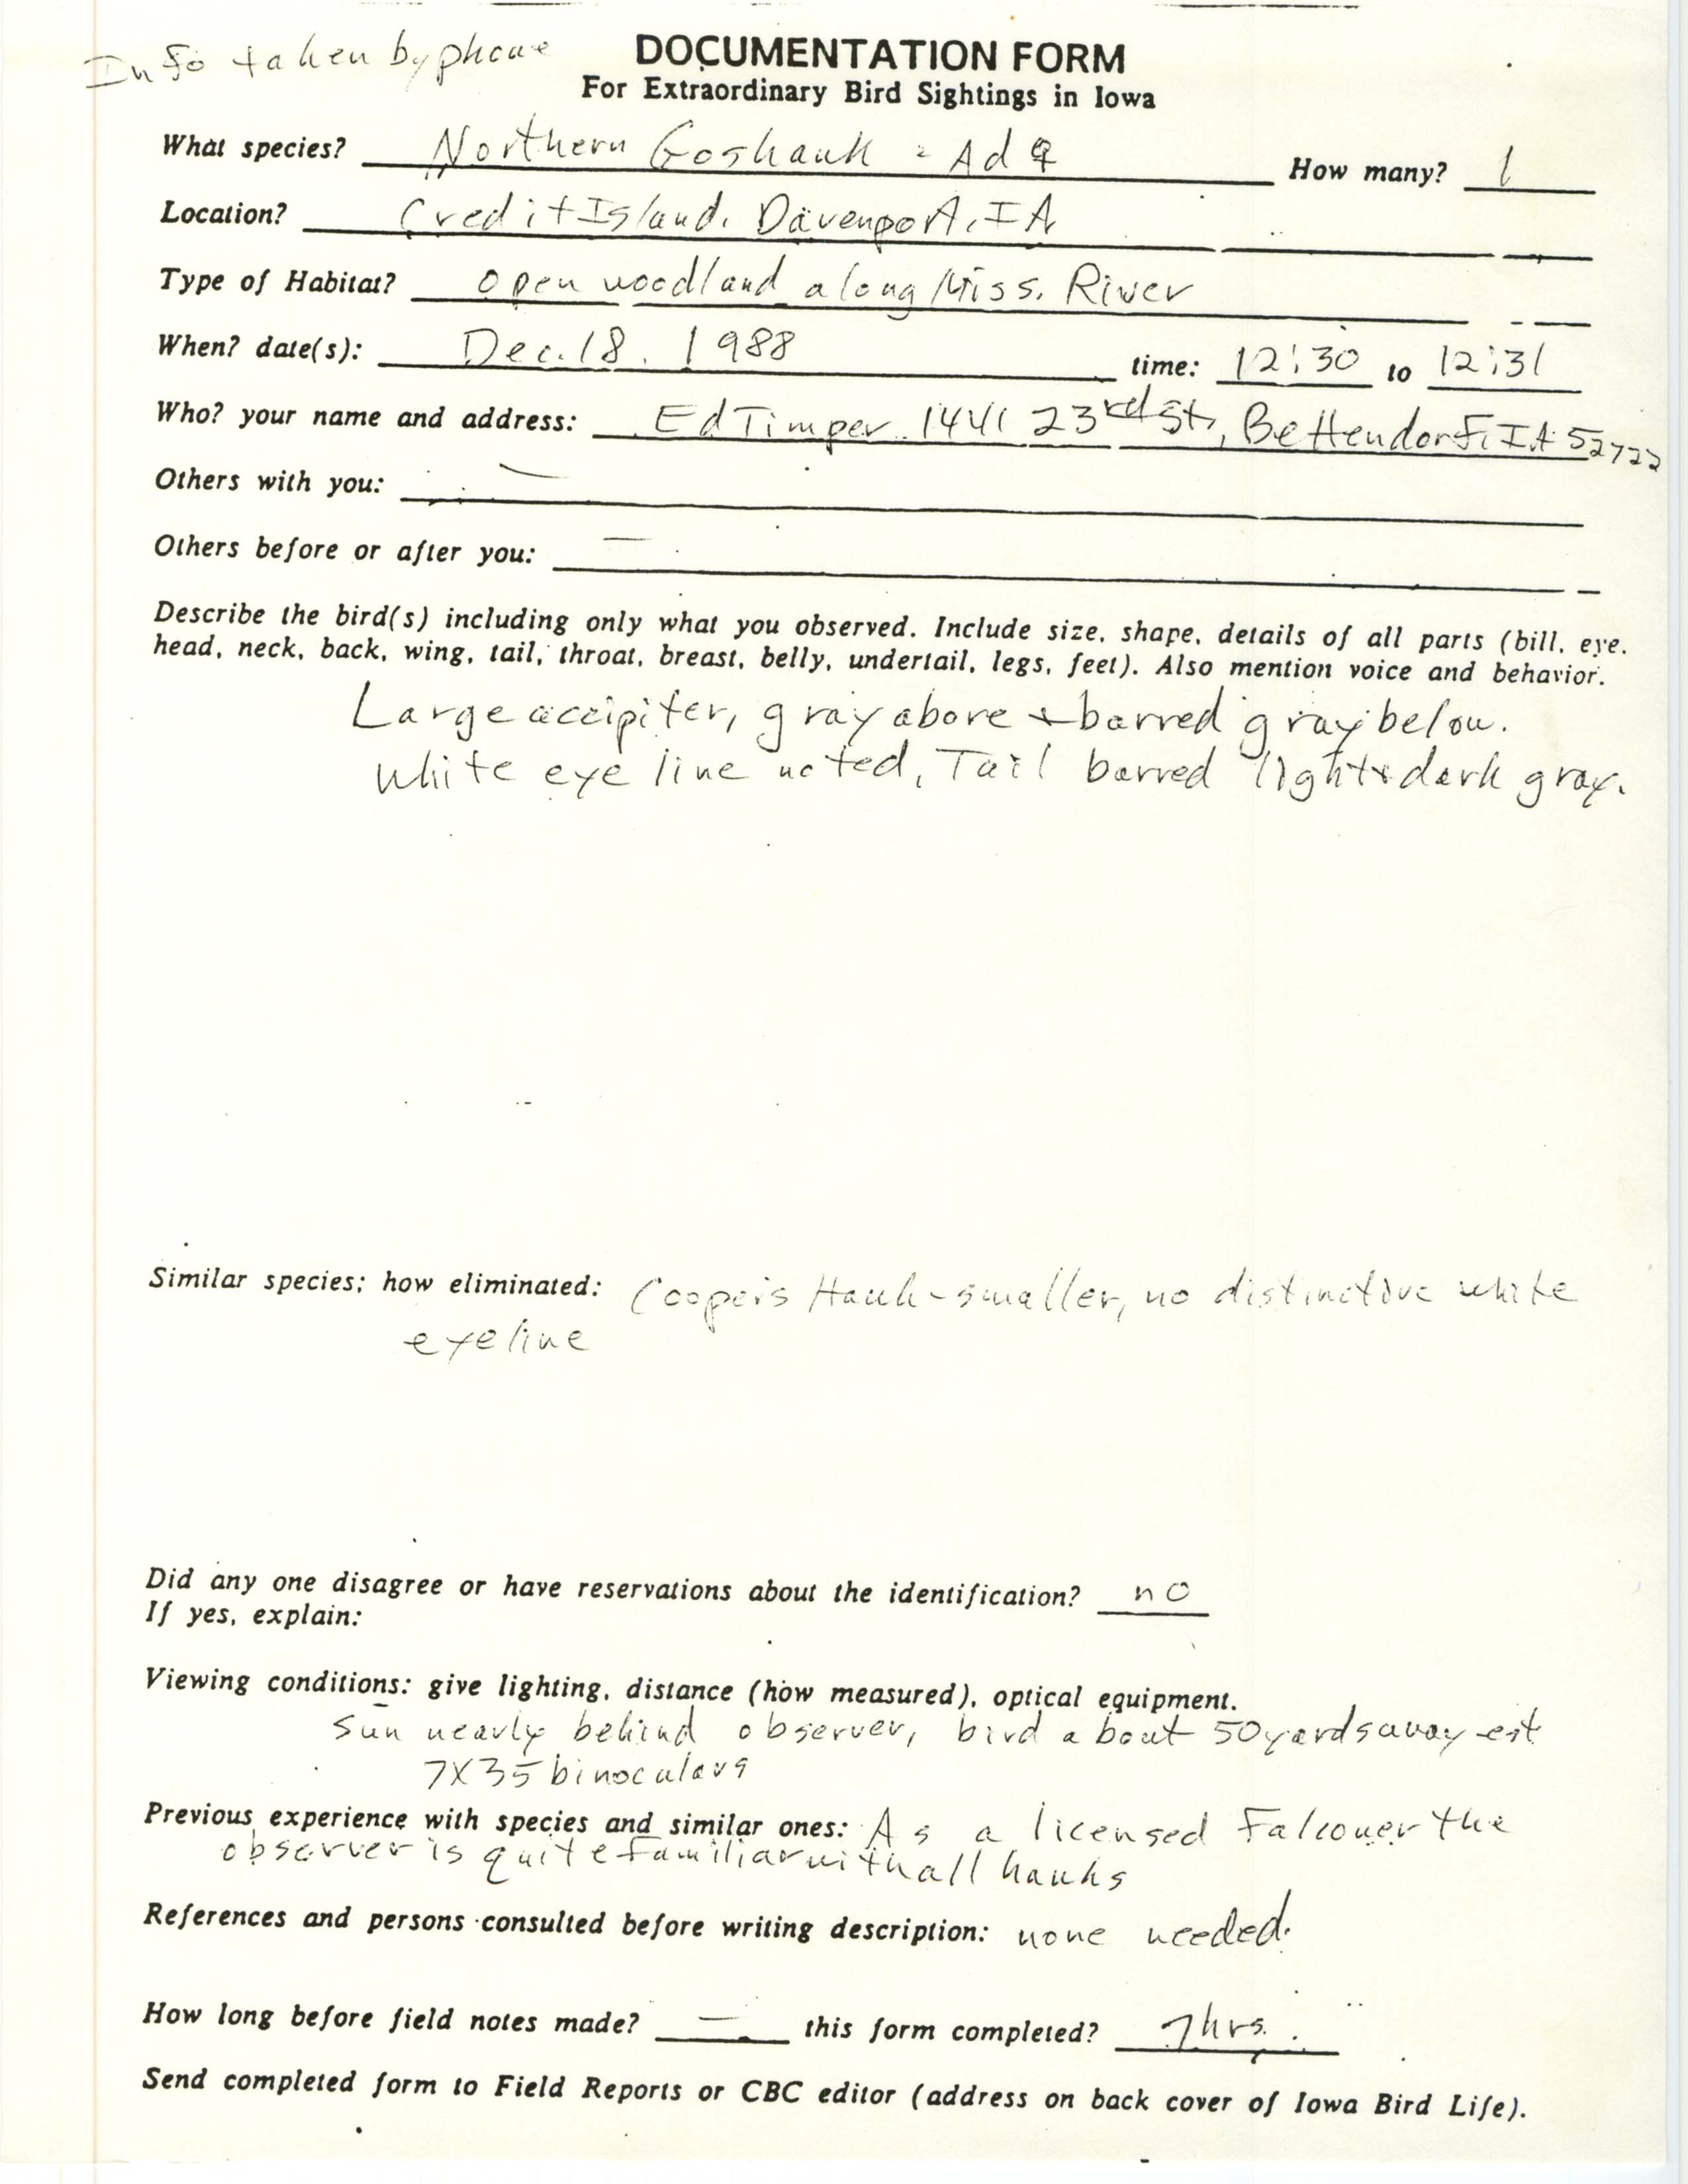 Rare bird documentation form for Northern Goshawk at Credit Island, 1988